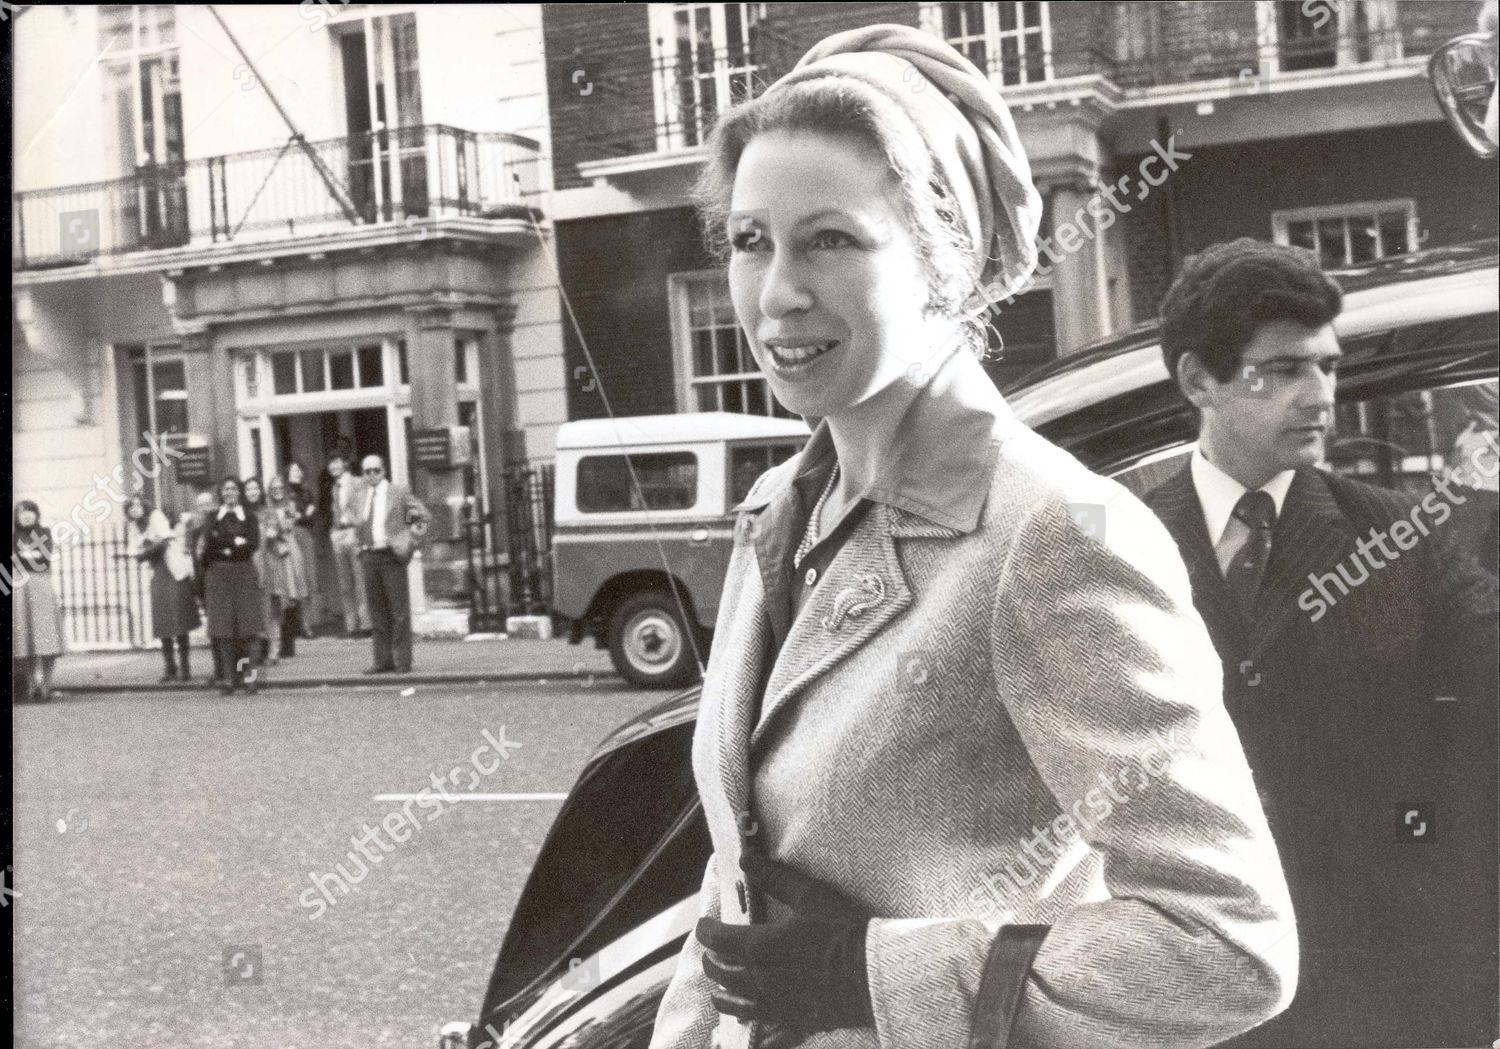 princess-anne-now-princess-royal-november-1978-princess-anne-visits-r-n-v-r-hill-street-for-lunch-royalty-shutterstock-editorial-890896a.jpg